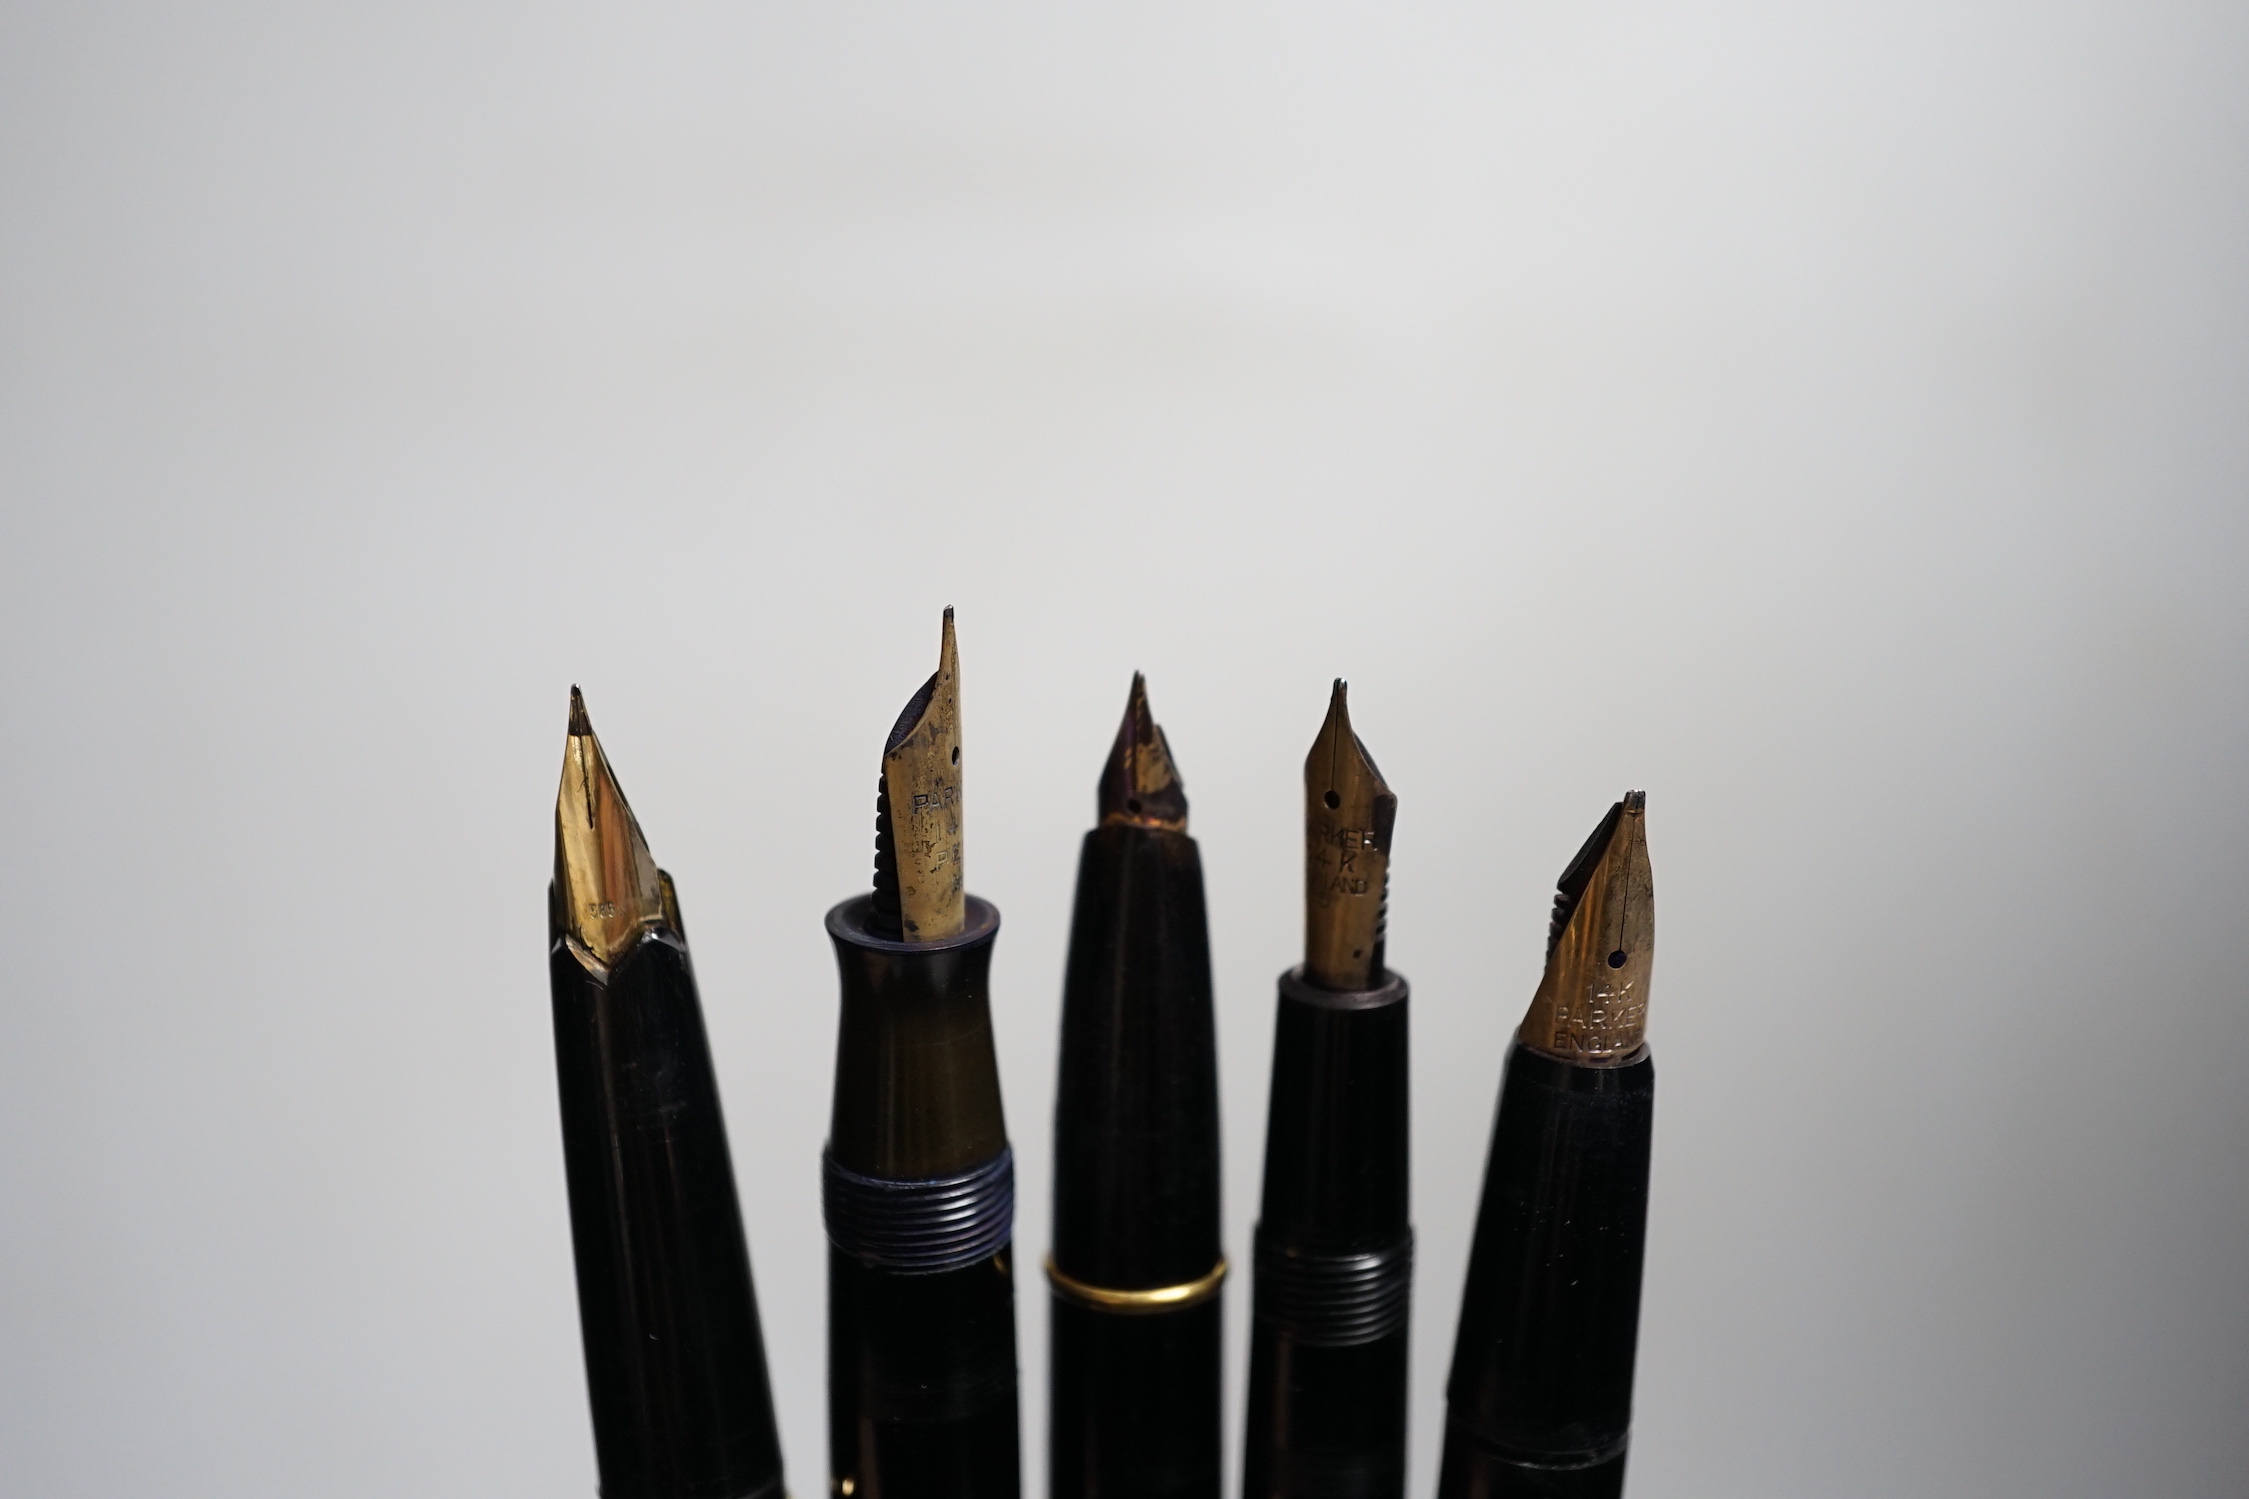 A group of 7 various pens including Mont Blanc, Watermans, Parker etc.